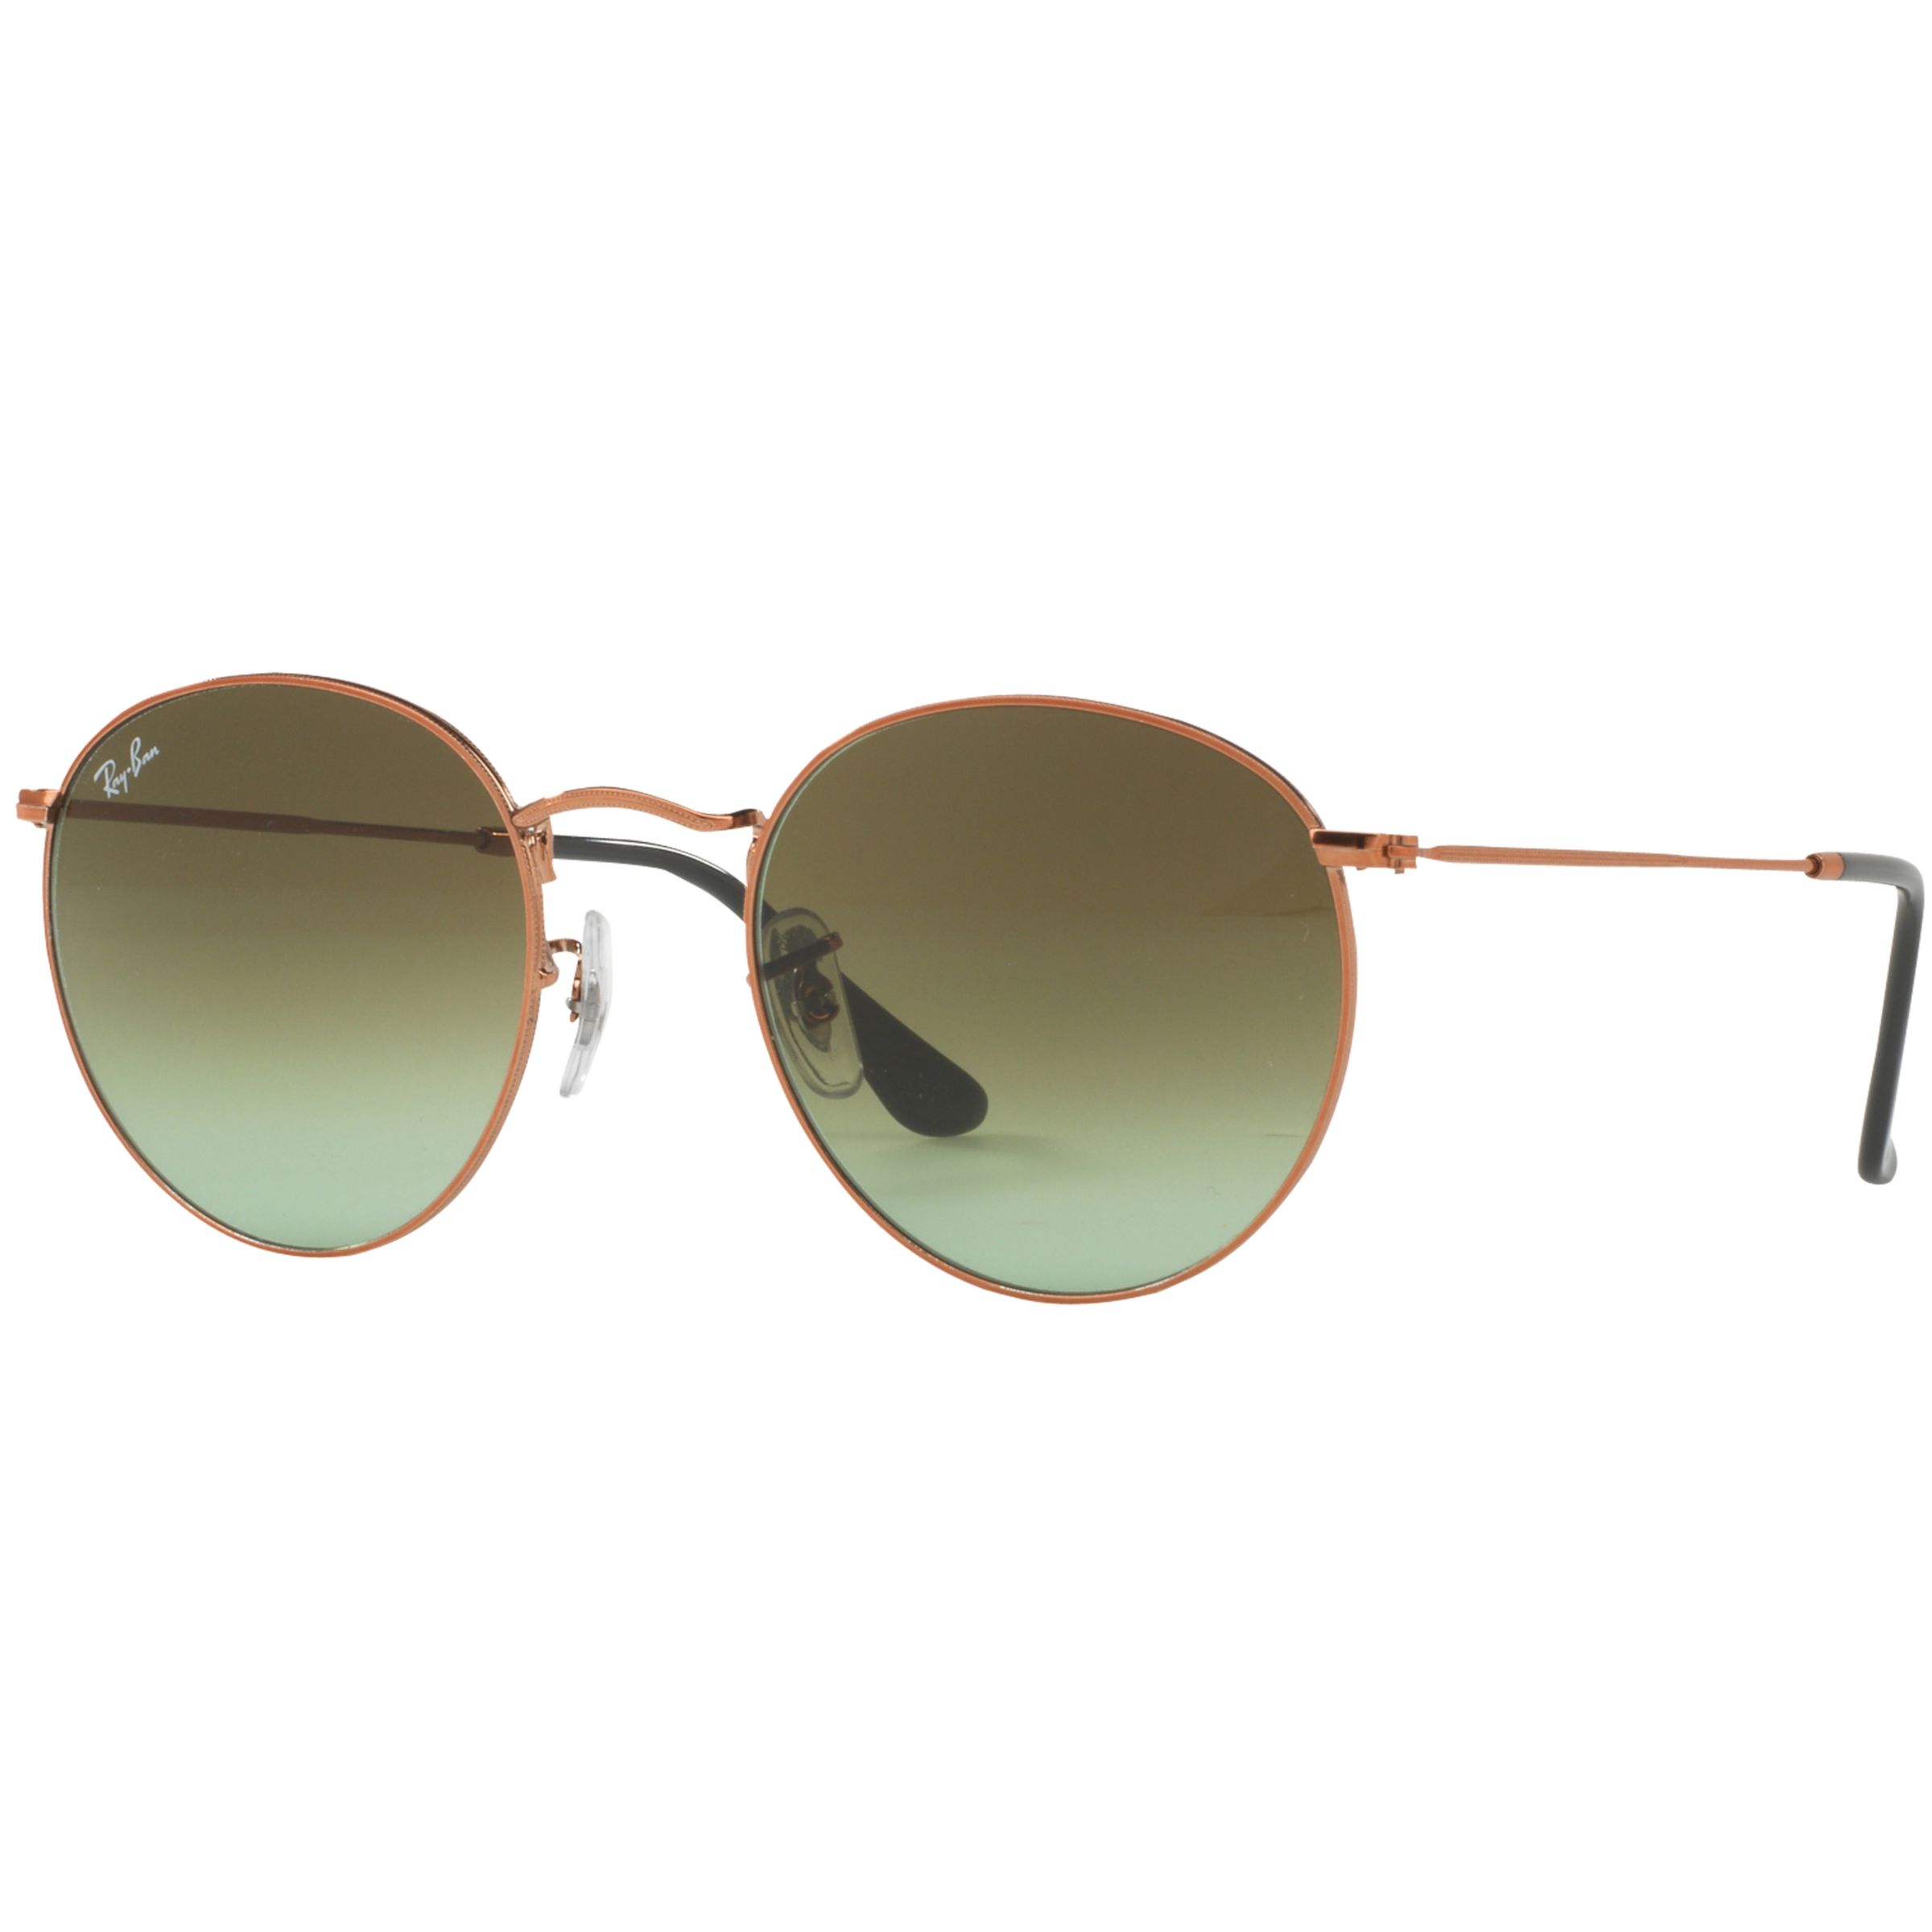 Ray-Ban RB3447 Round Sunglasses, Bronze/Green Gradient